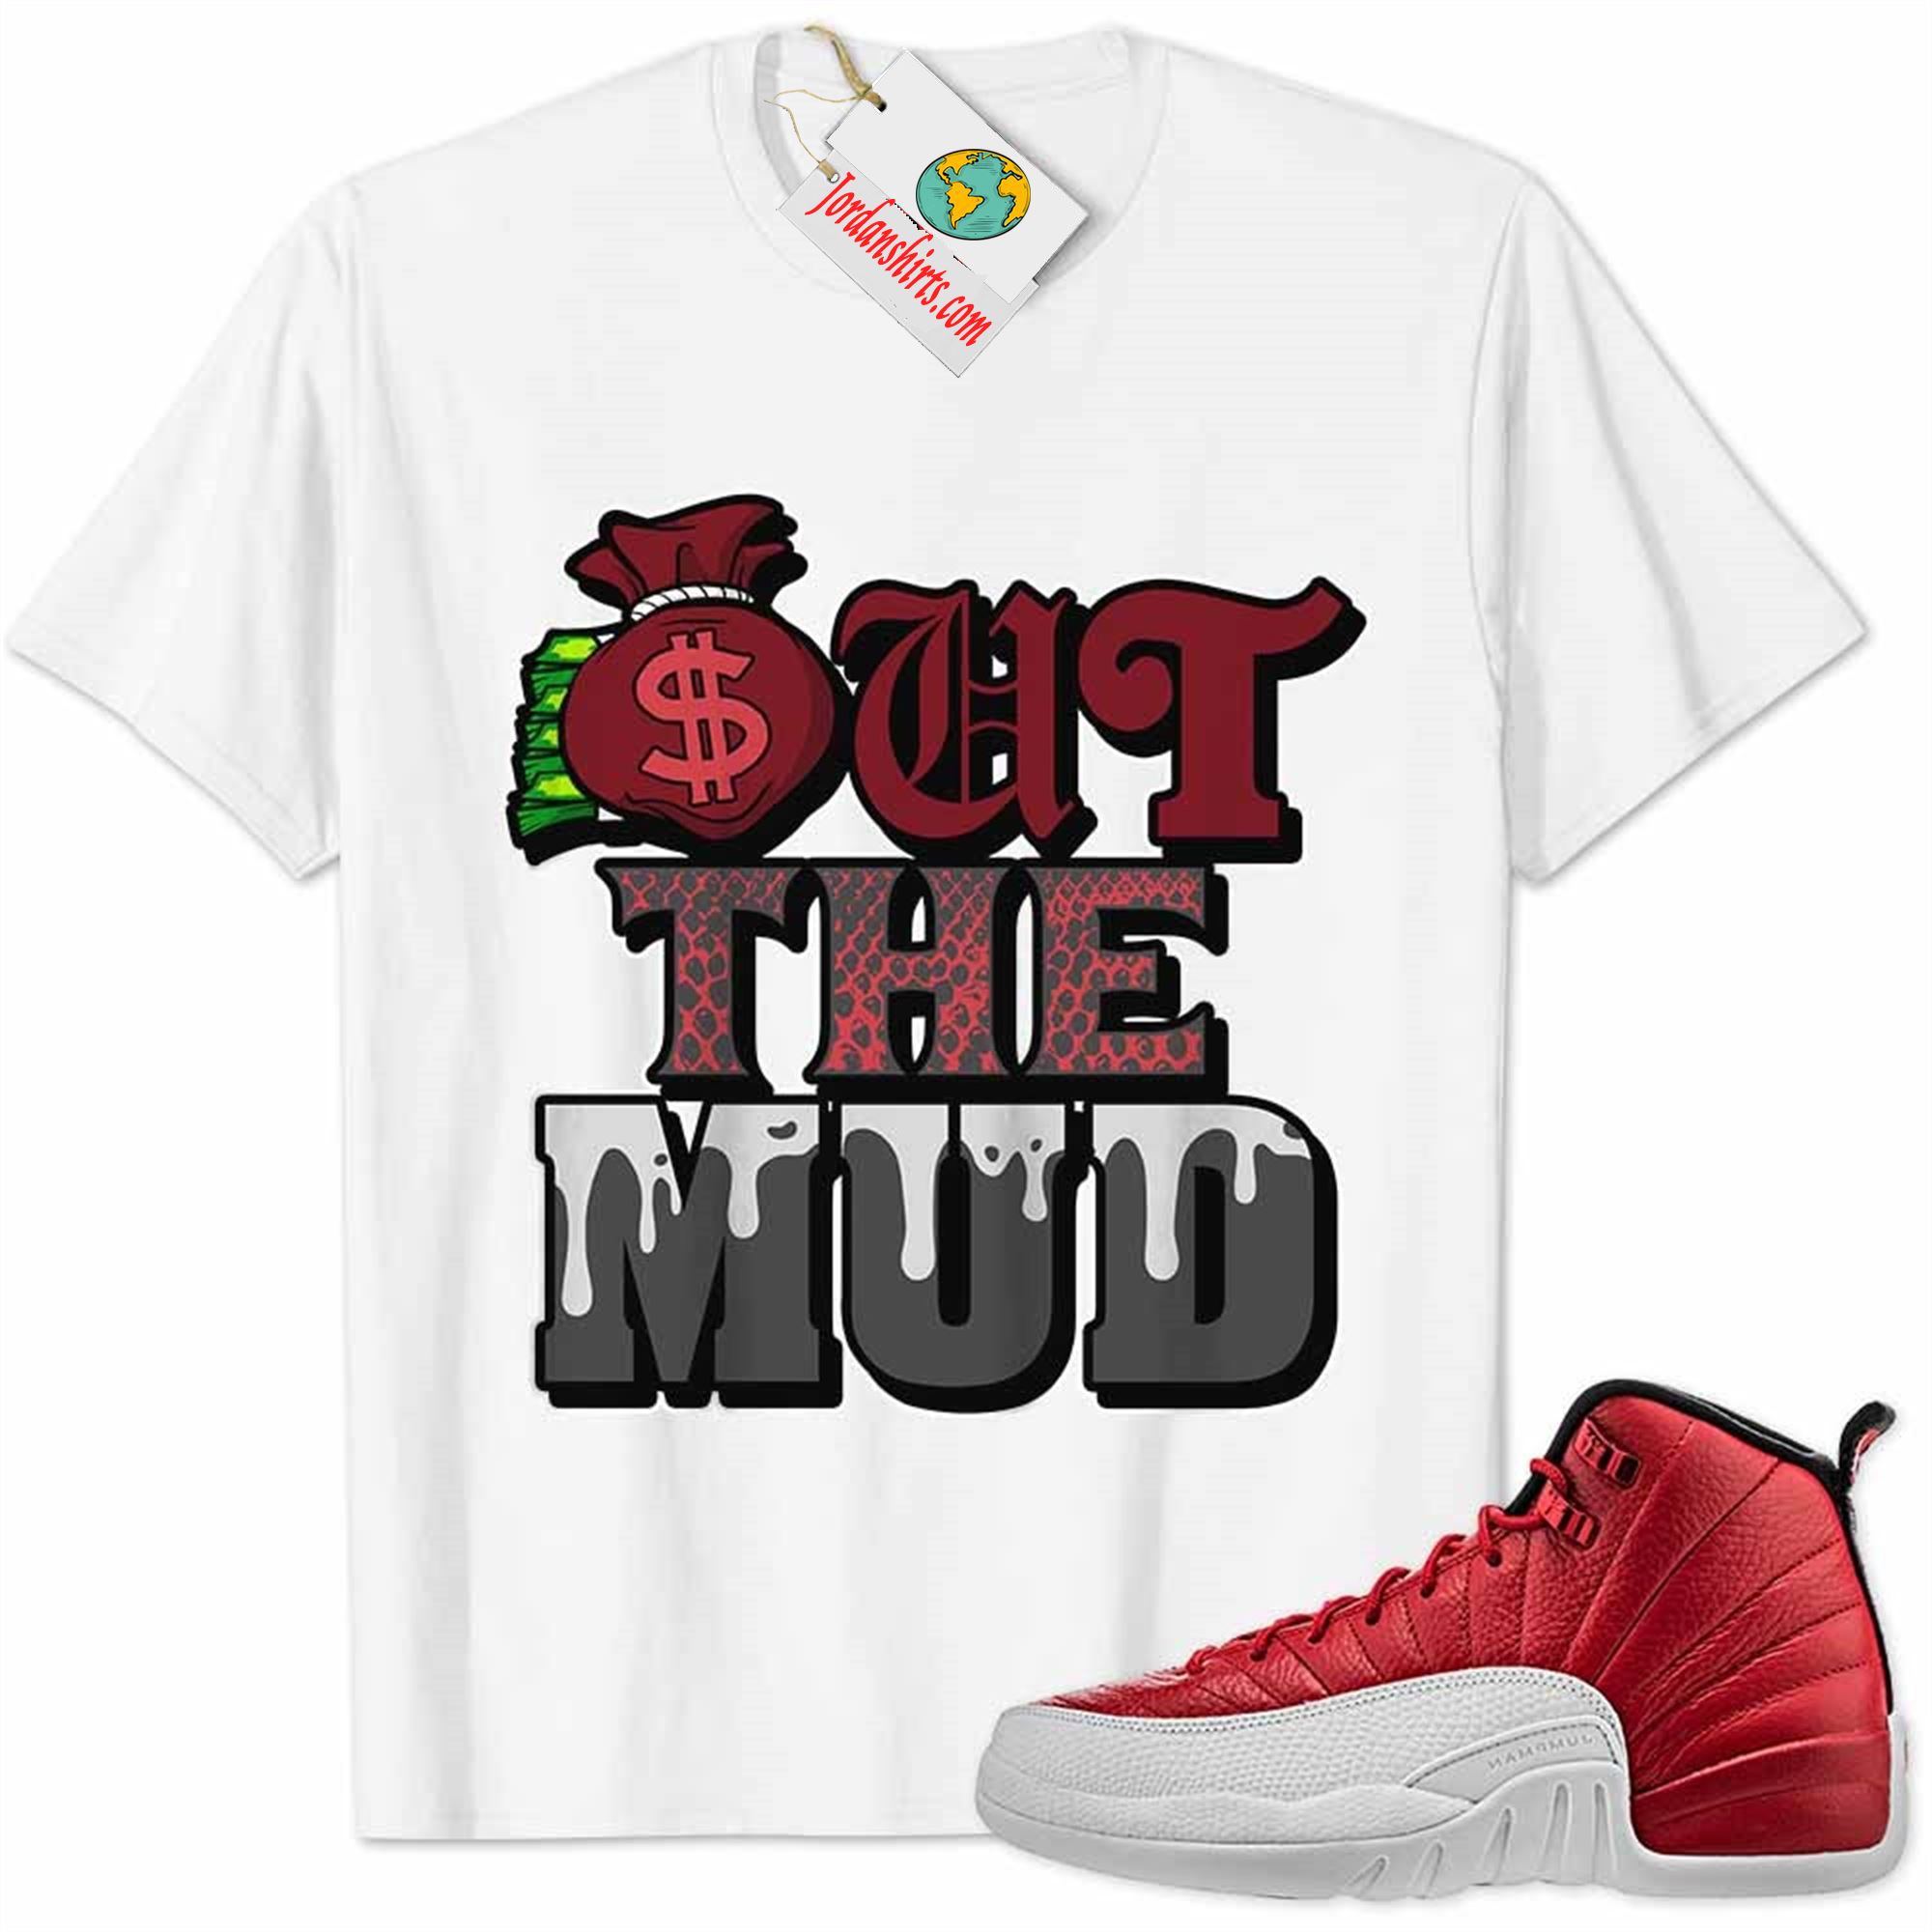 Jordan 12 Shirt, Jordan 12 Gym Red Shirt Out The Mud Money Bag White Size Up To 5xl